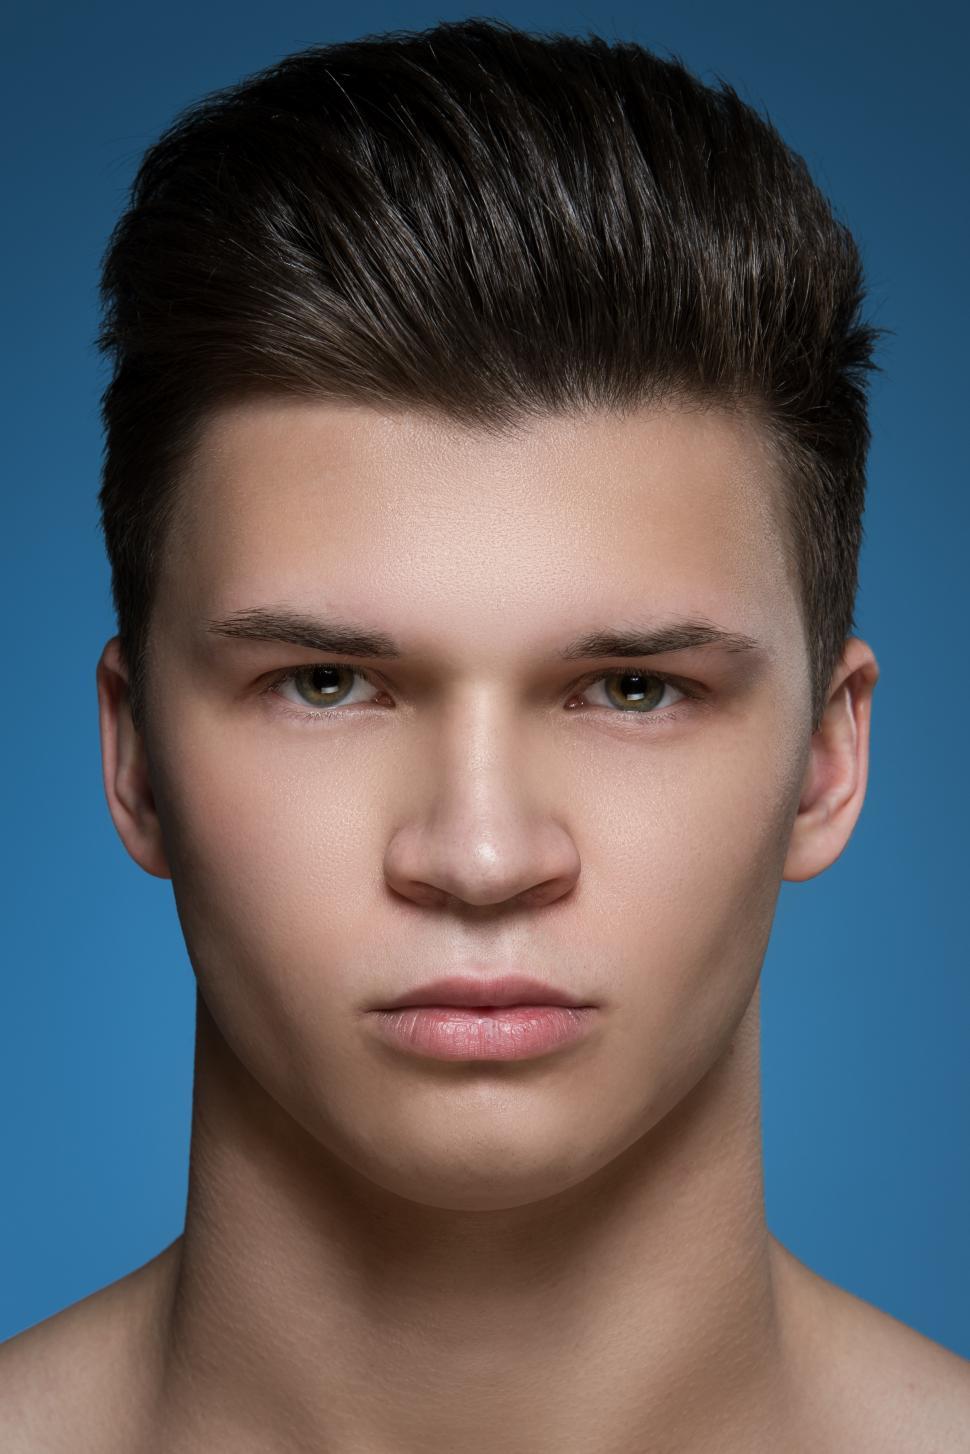 Free Image of Young man on blue background - headshot 